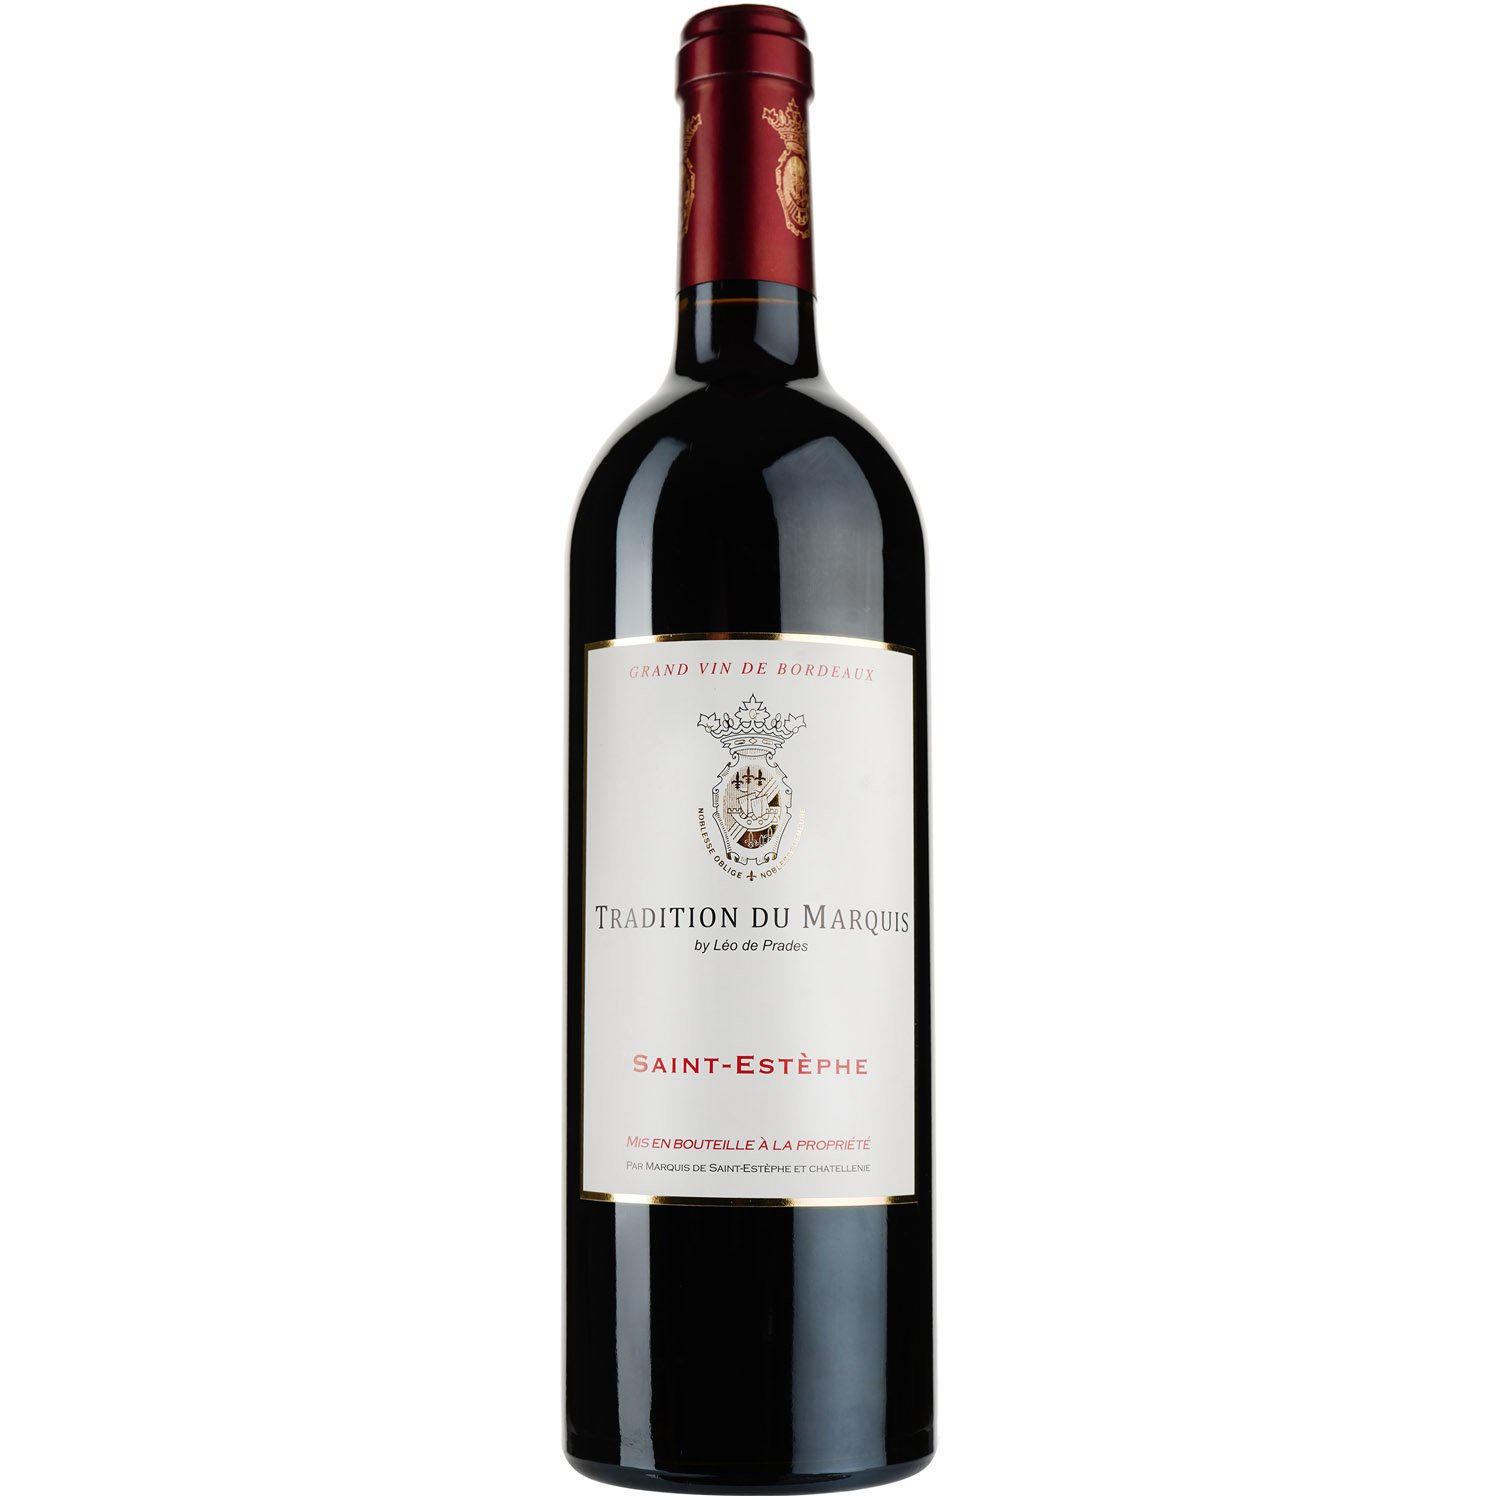 Вино Tradition du Marquis by Leo de Prades AOP Saint-Estephe 2014, червоне, сухе, 0,75 л - фото 1